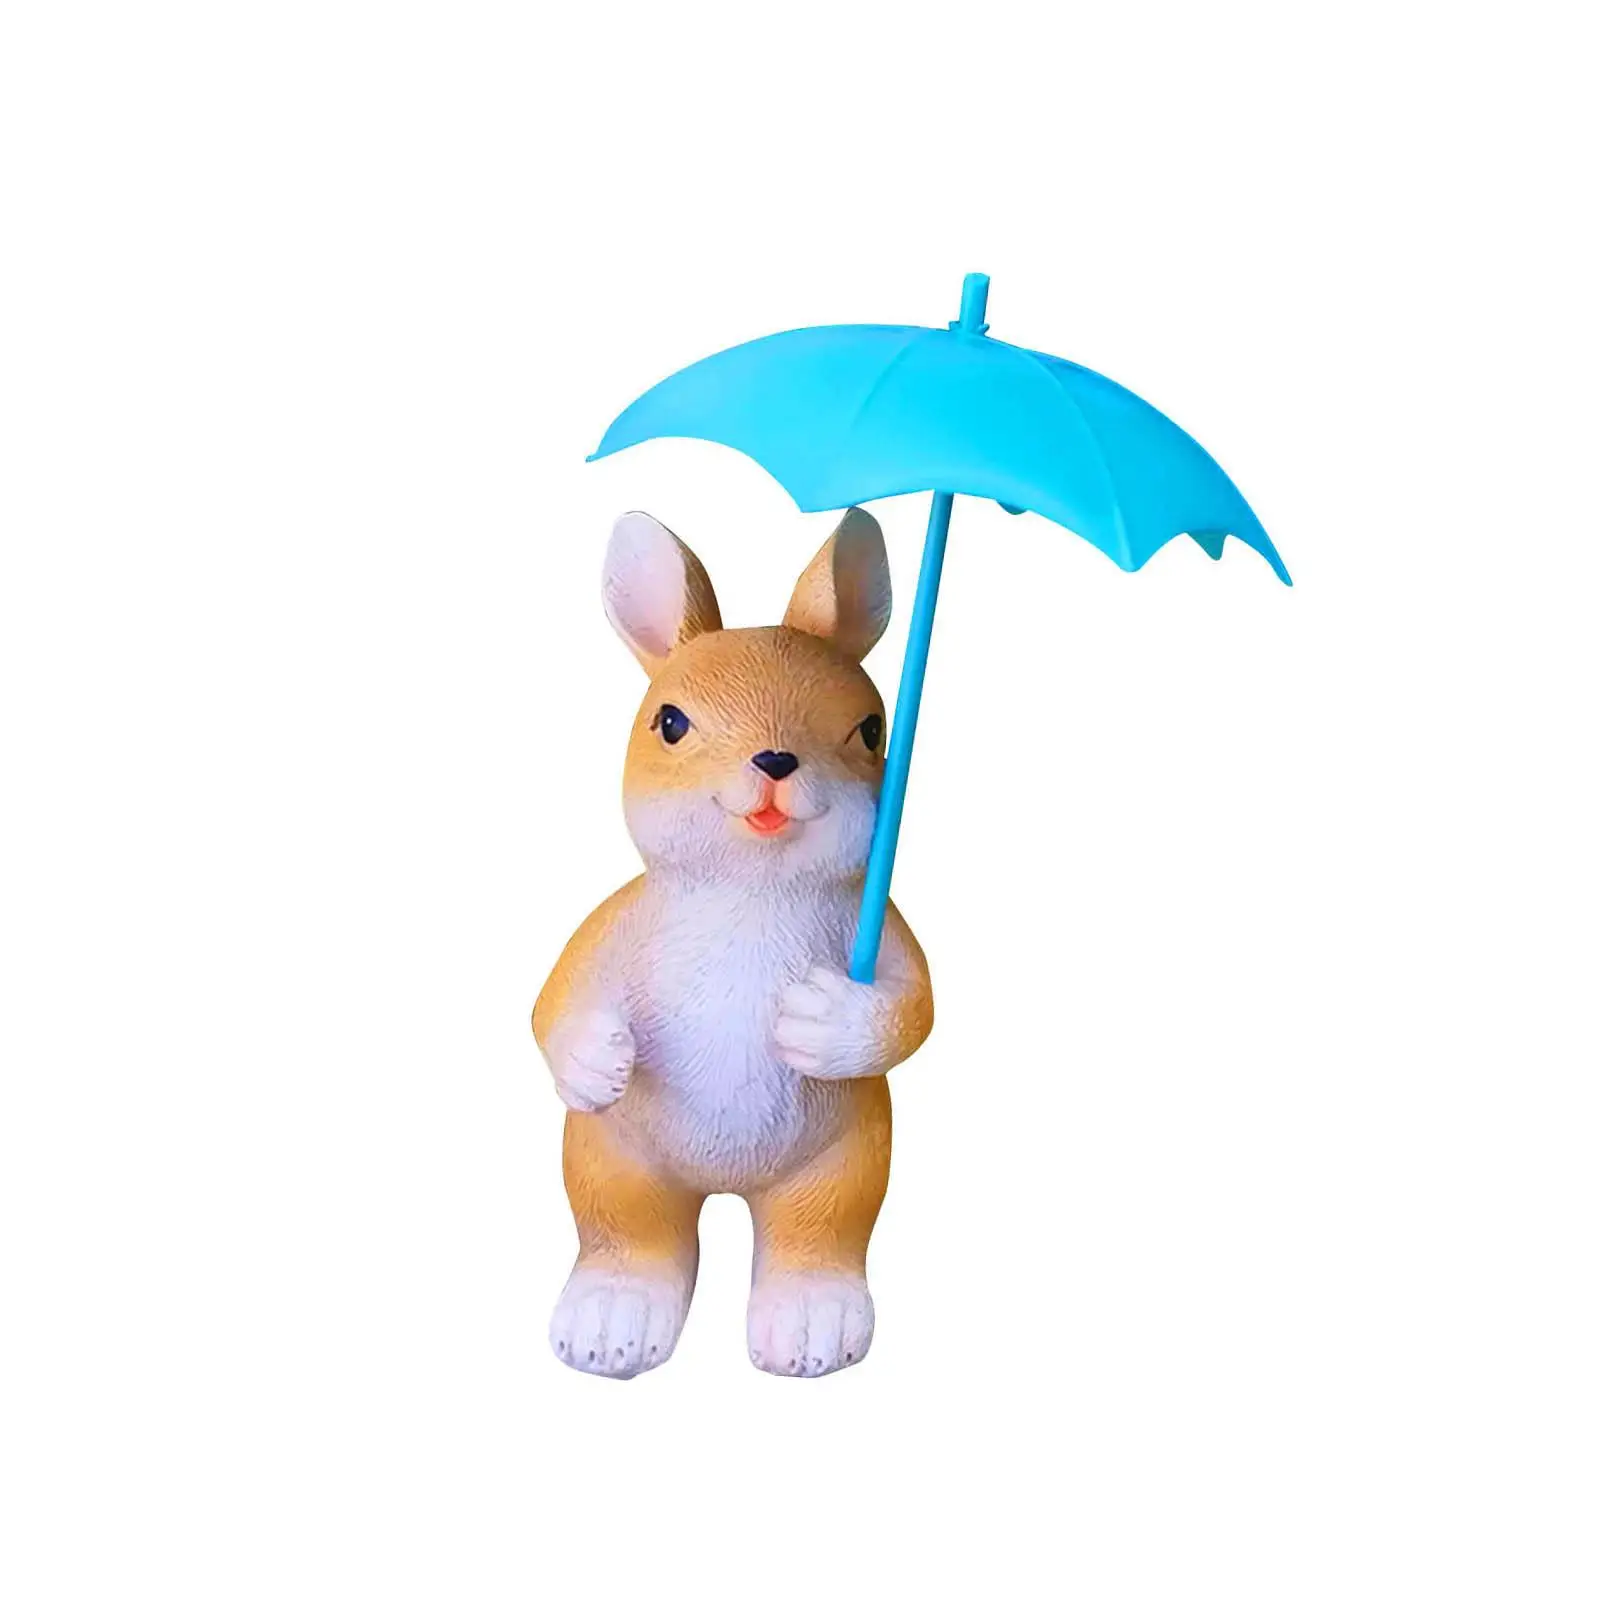 Umbrella Rabbit Statue Realistic Rabbit Holding Umbrella Figure Umbrella Rabbit Figurine for Porch Lawn Yard Decoration